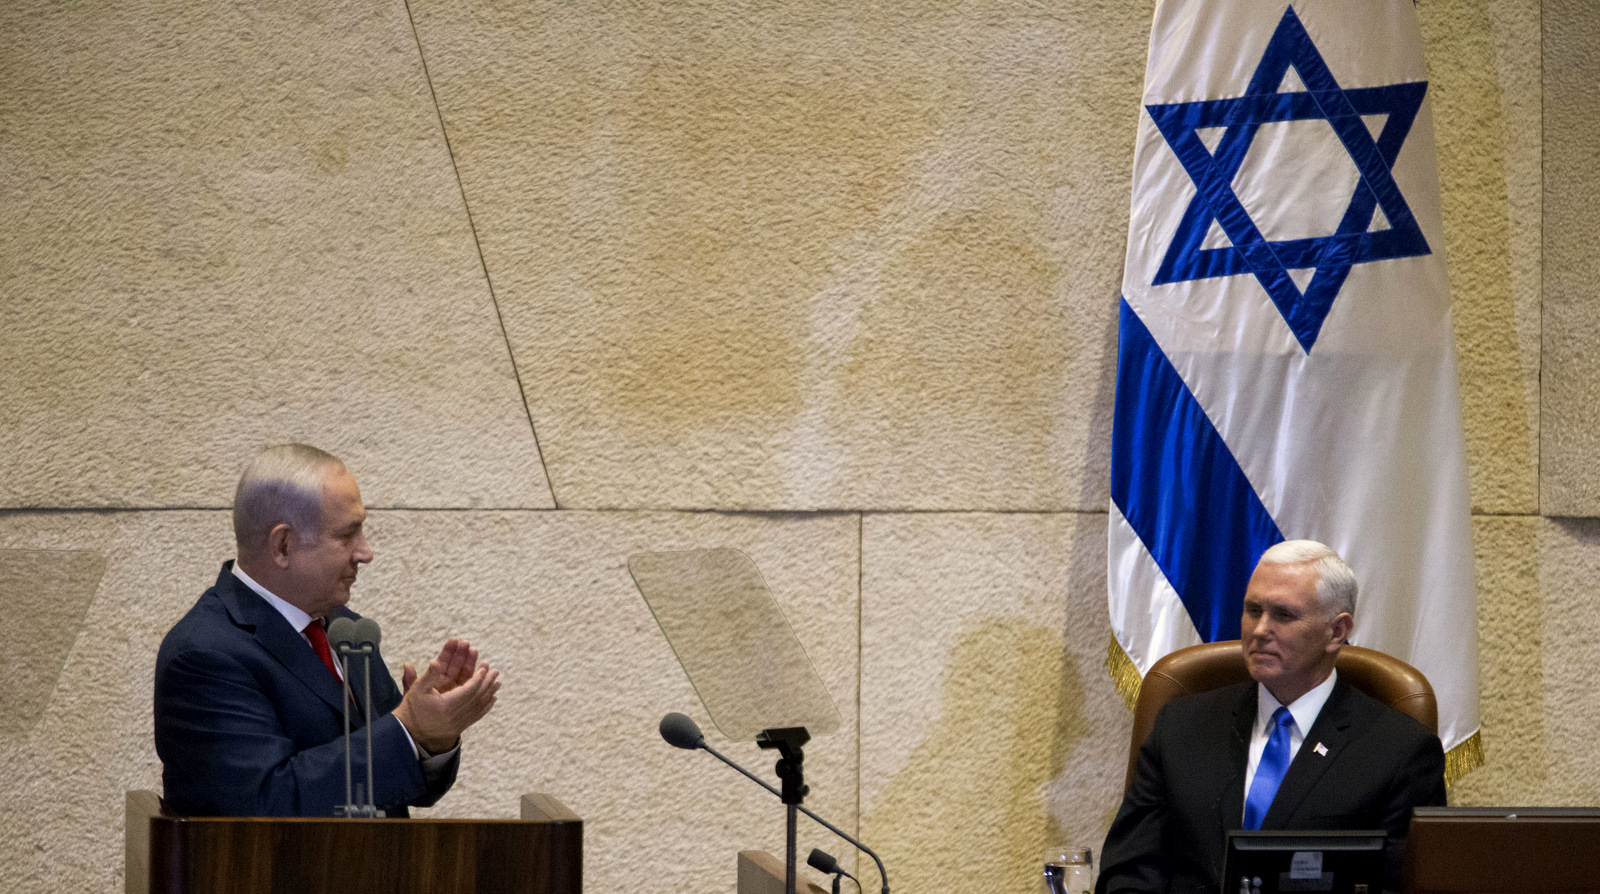 Israel's Prime Minister Benjamin Netanyahu, left, applauds to U.S. Vice President Mike Pence in Israel's parliament in Jerusalem, Jan. 22, 2018. (AP/Ariel Schalit)